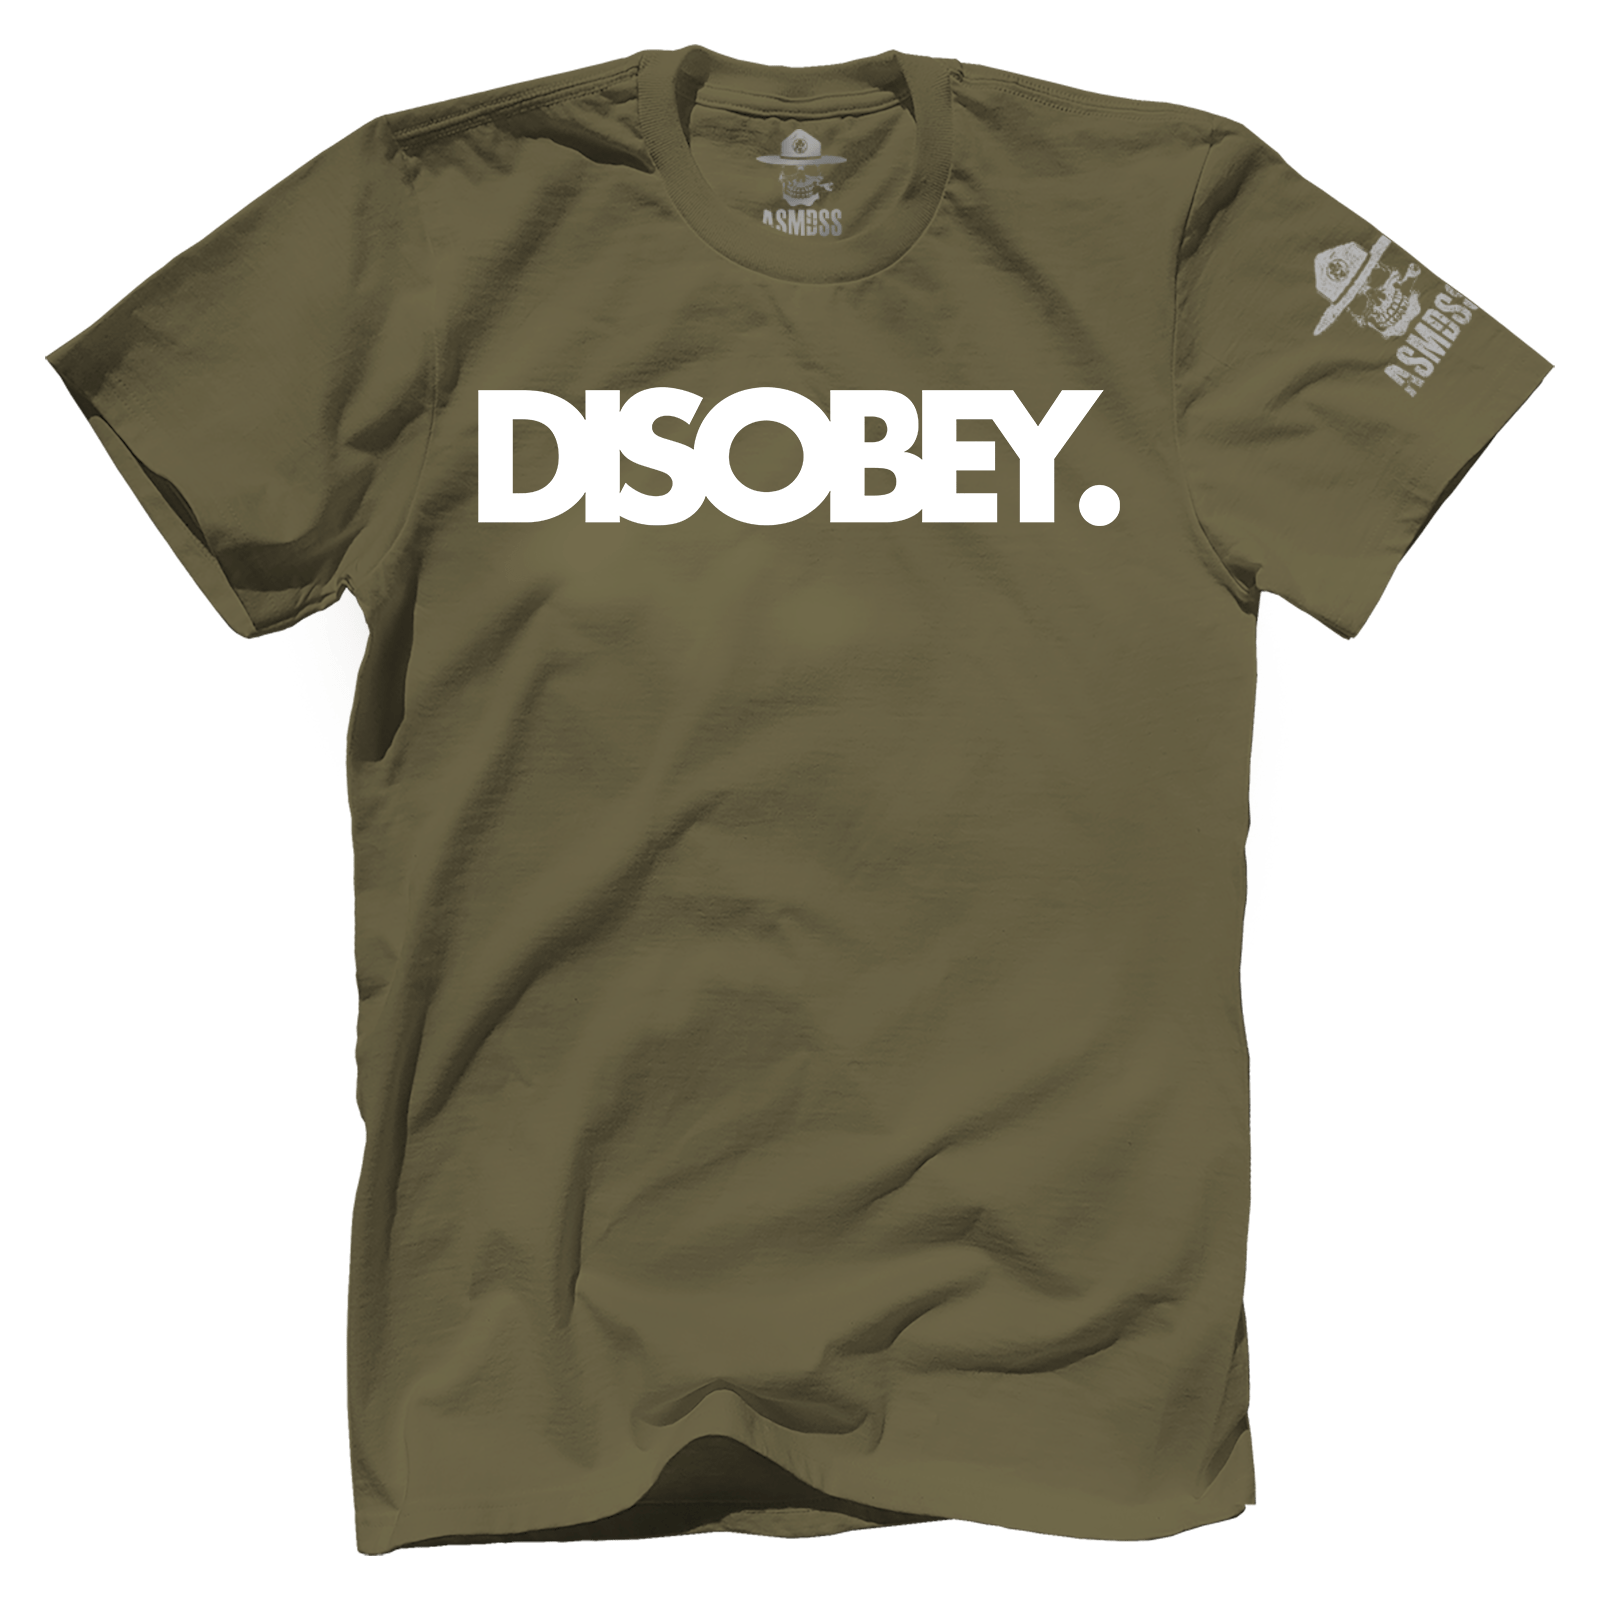 Disobey | ASMDSS Gear